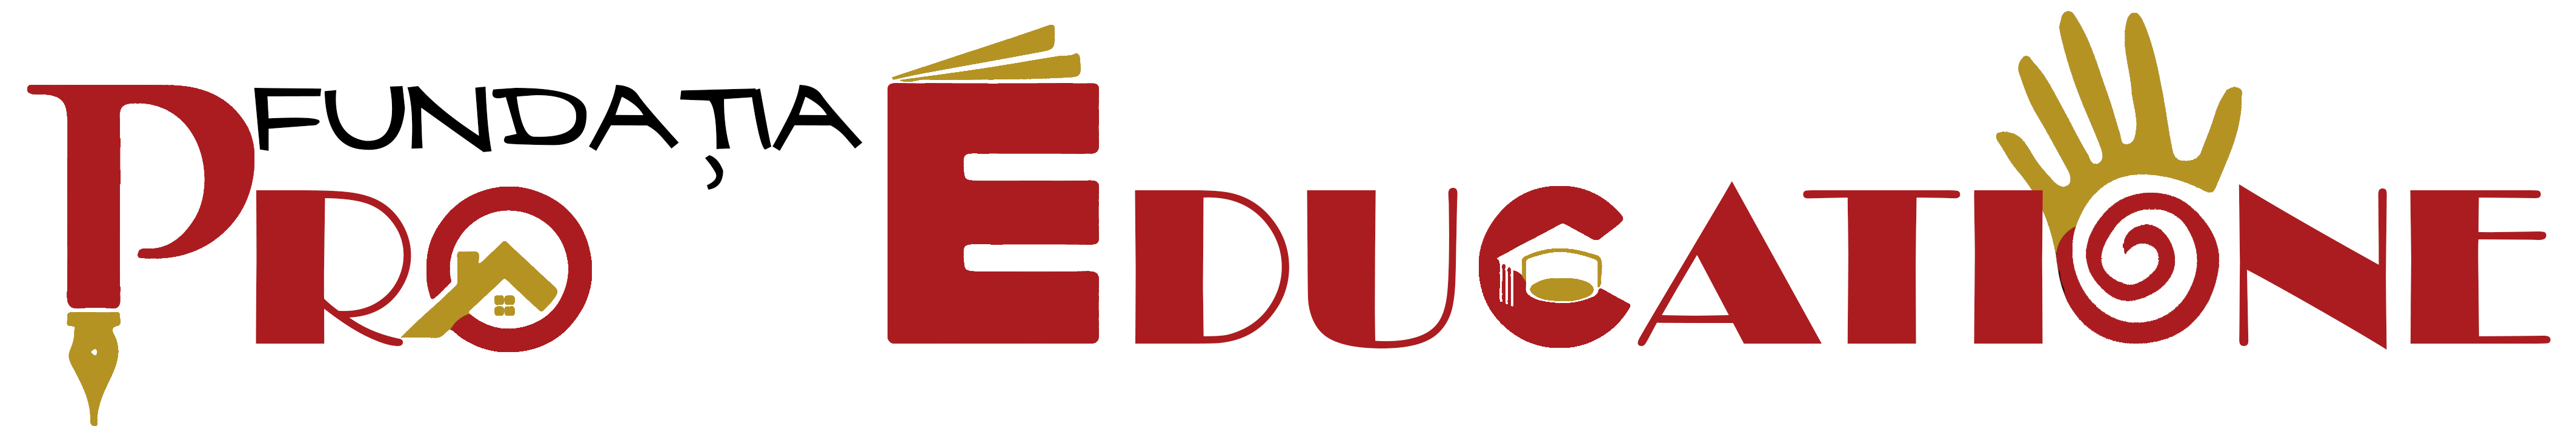 Fundația Pro Educatione Iași logo